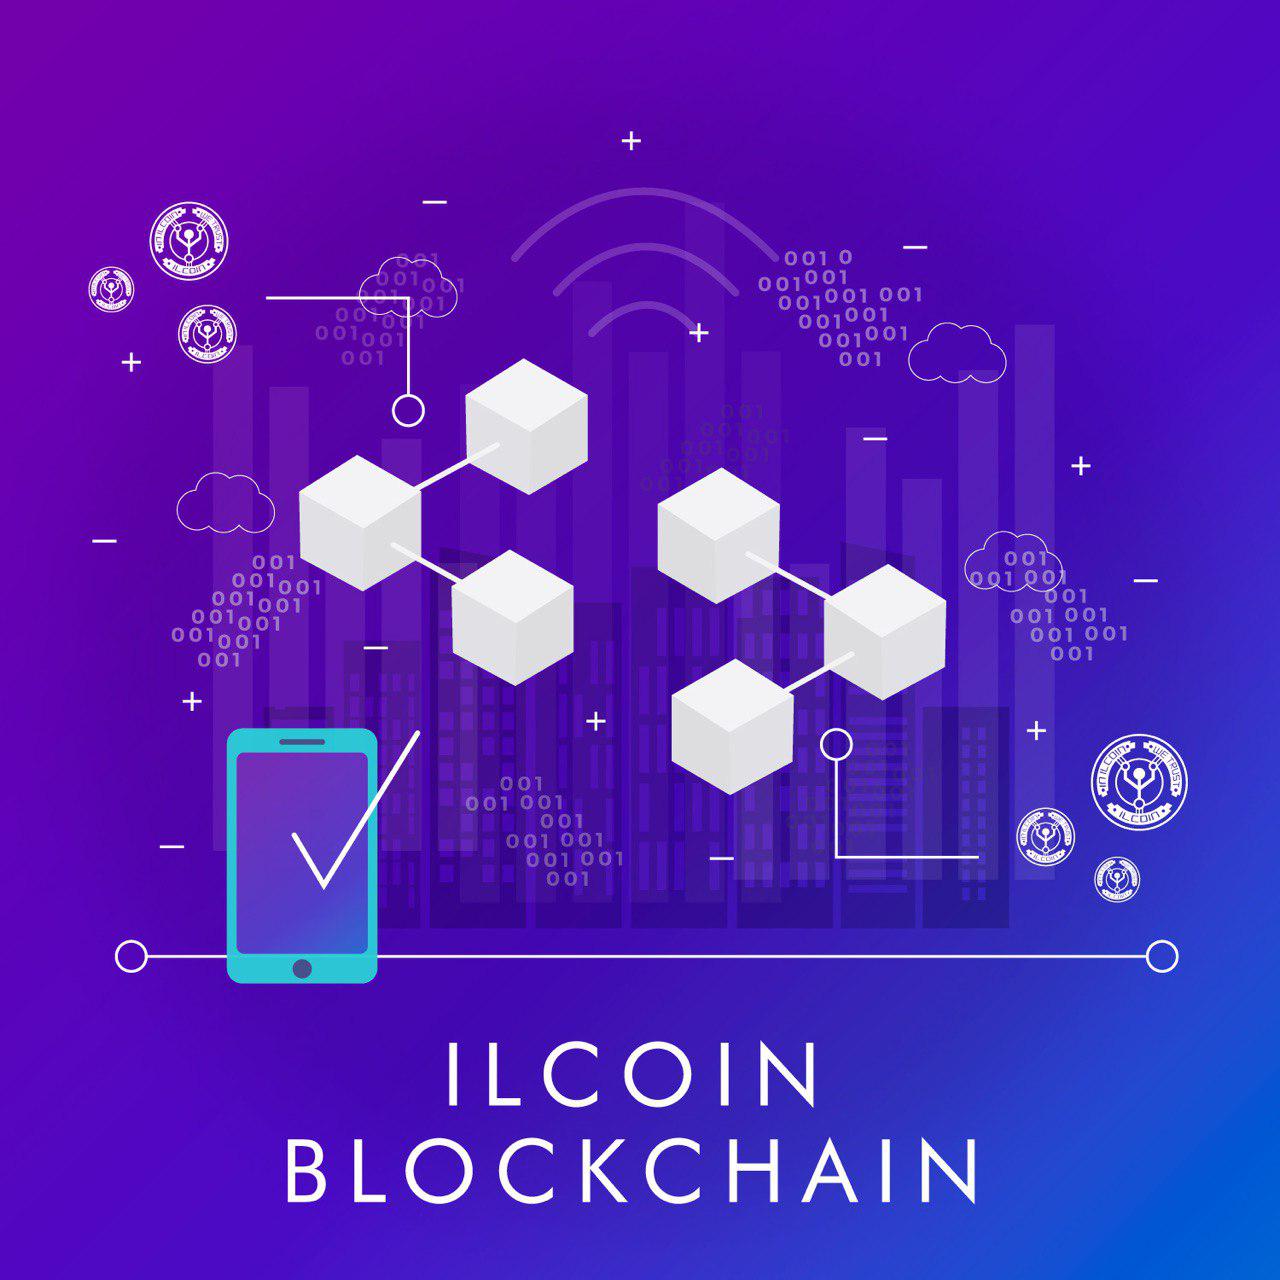  ilcoin trading exchanges bit-z resuming resistant blockchain-based 